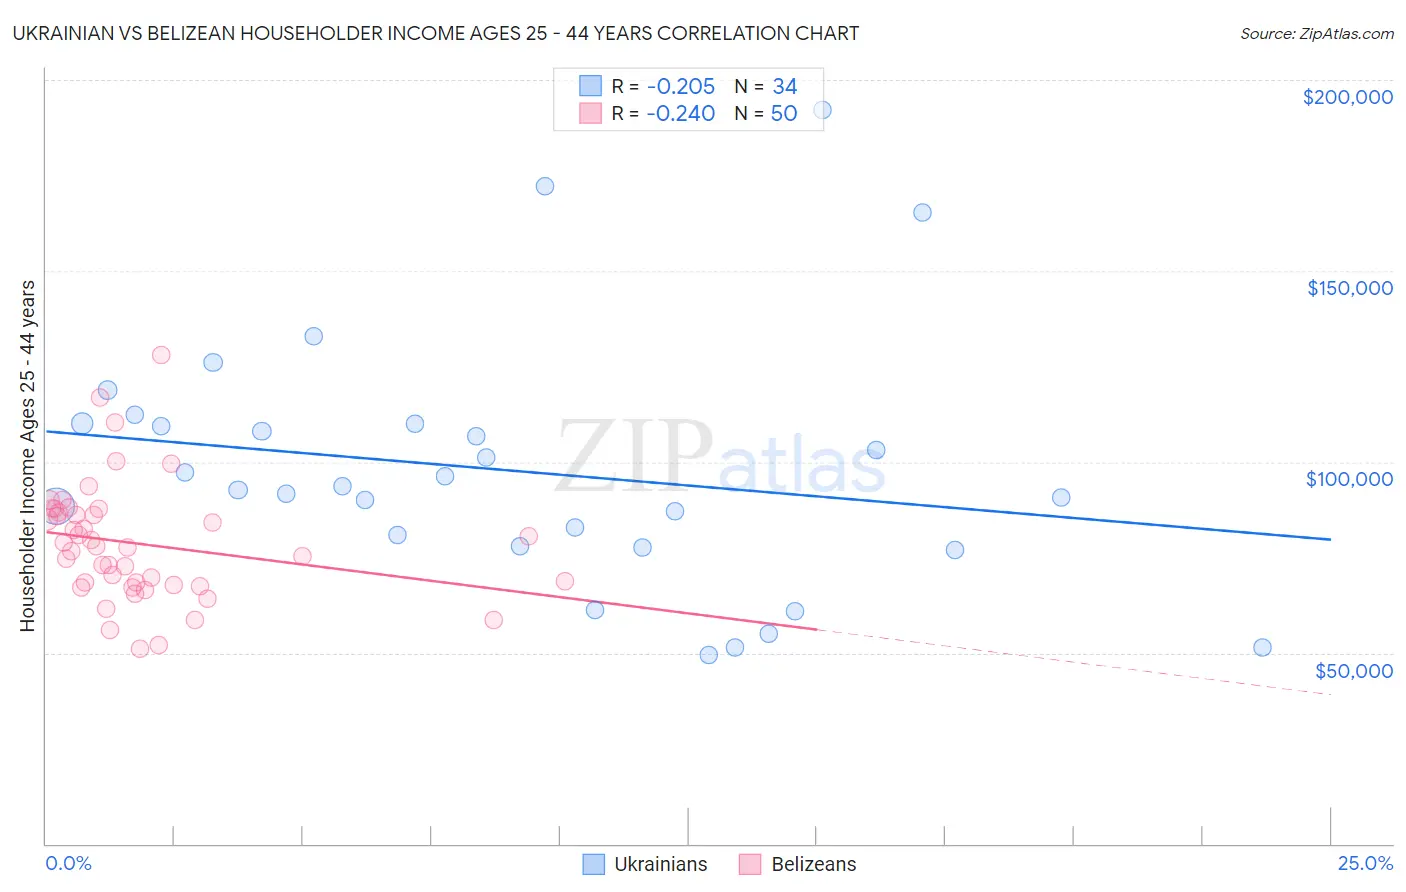 Ukrainian vs Belizean Householder Income Ages 25 - 44 years